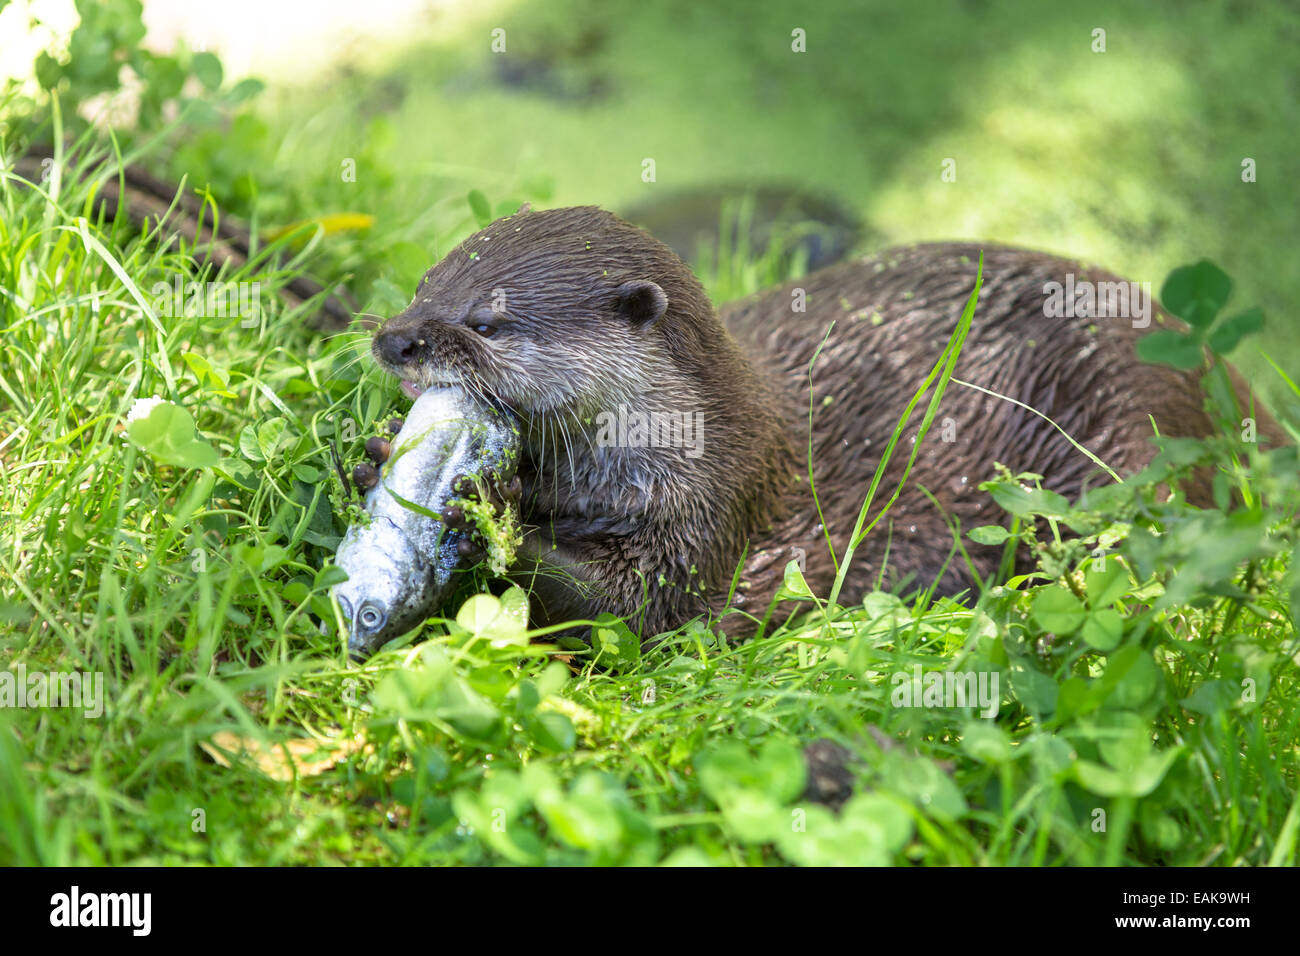 Asian Short-clawed Otter (Aonyx cinerea) eating a fish, Northwood, Christchurch, Canterbury Region, New Zealand Stock Photo